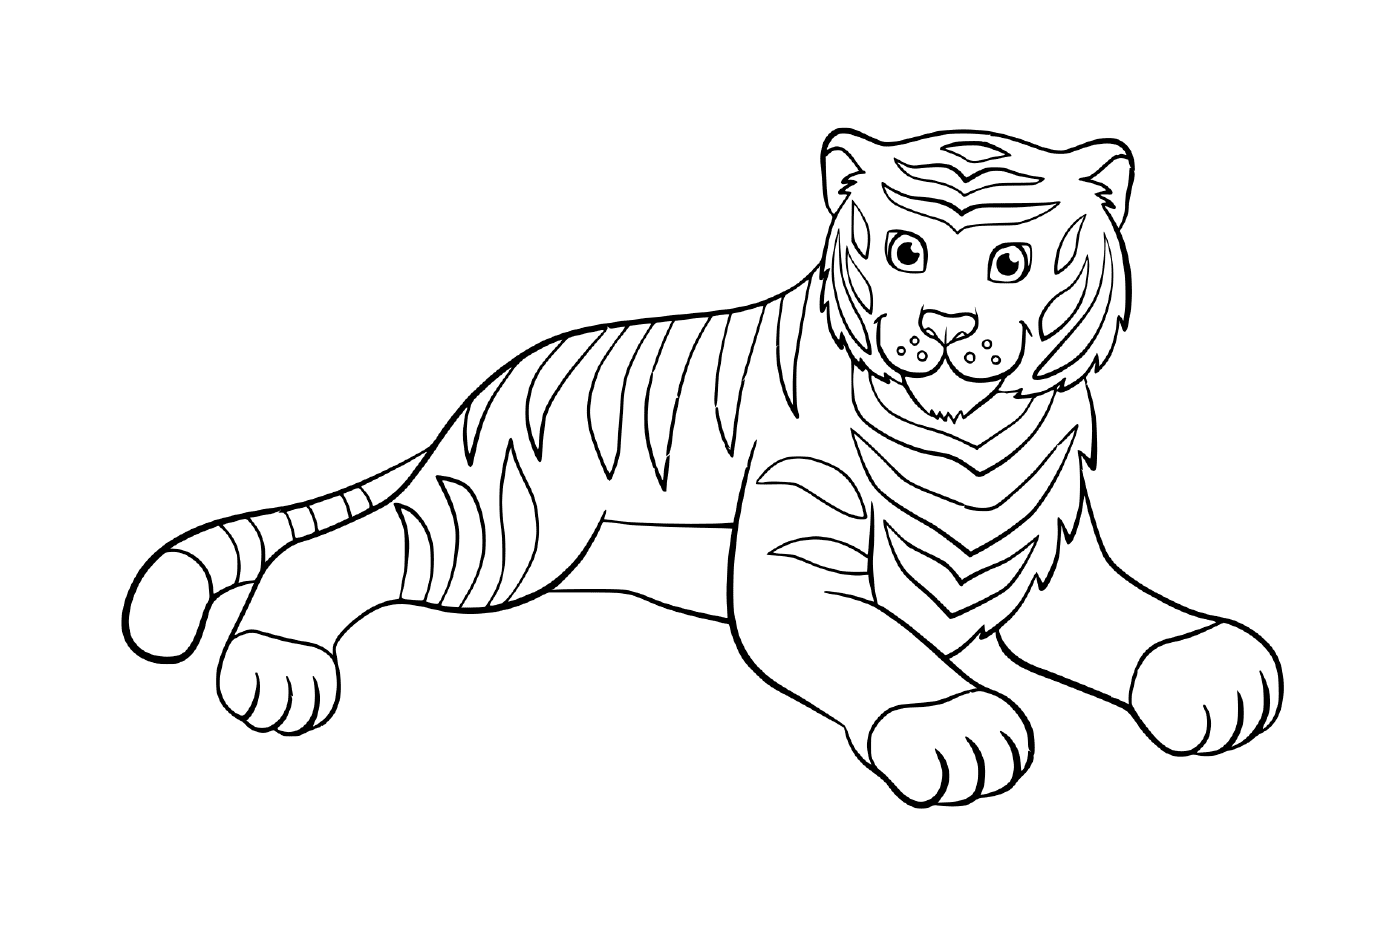  a tiger resting adorably 